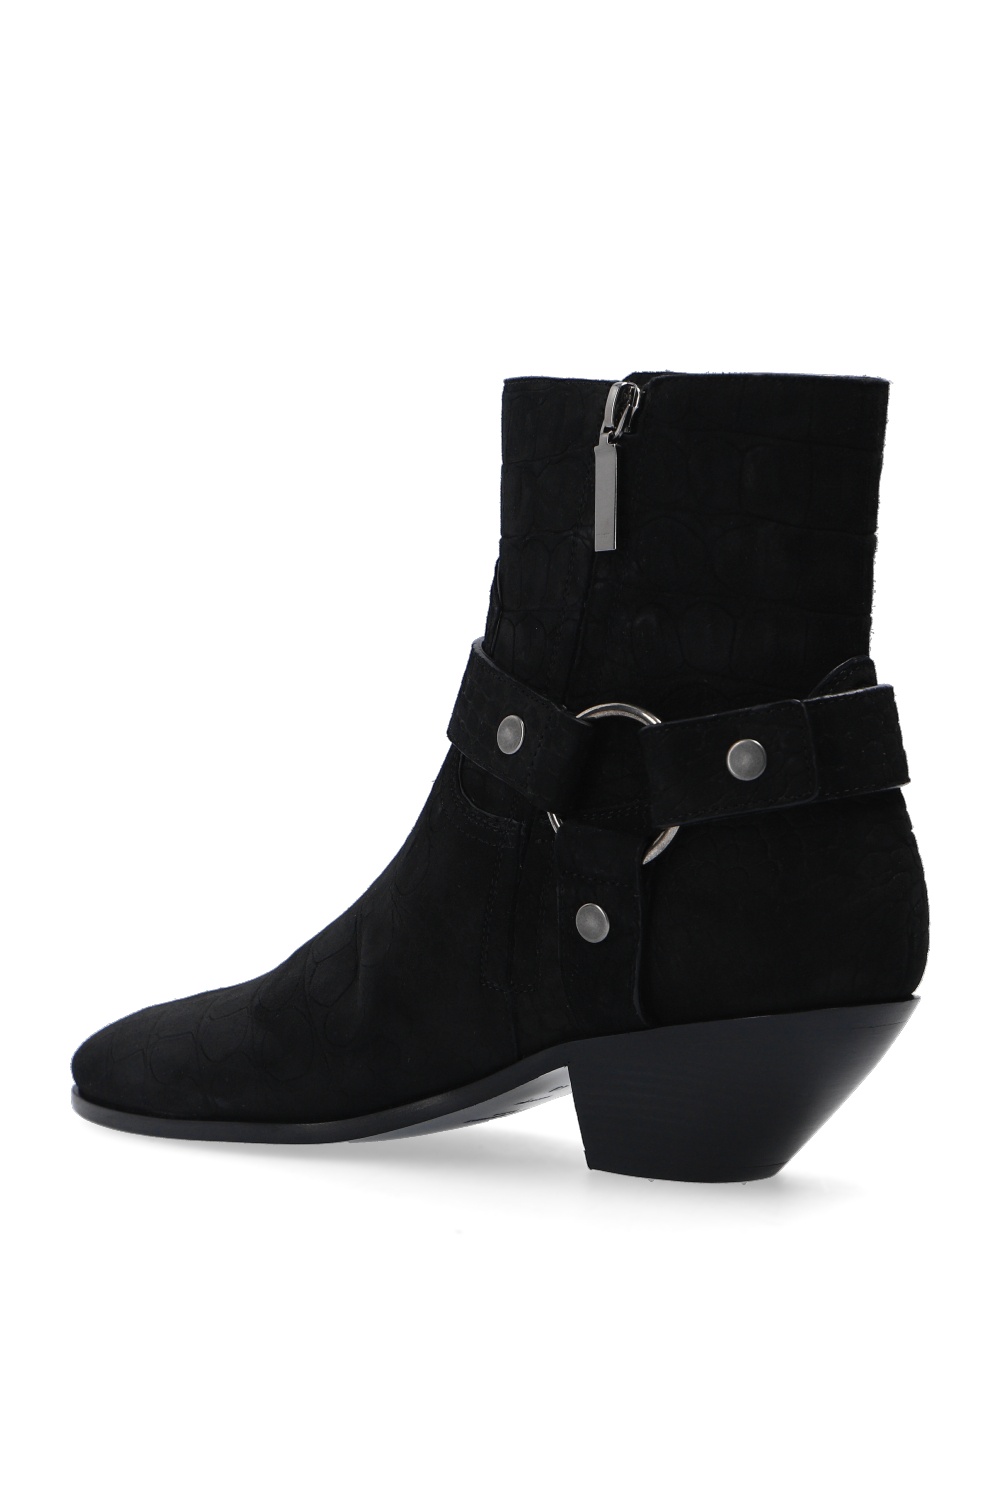 Saint Laurent ‘West’ suede heeled ankle boots